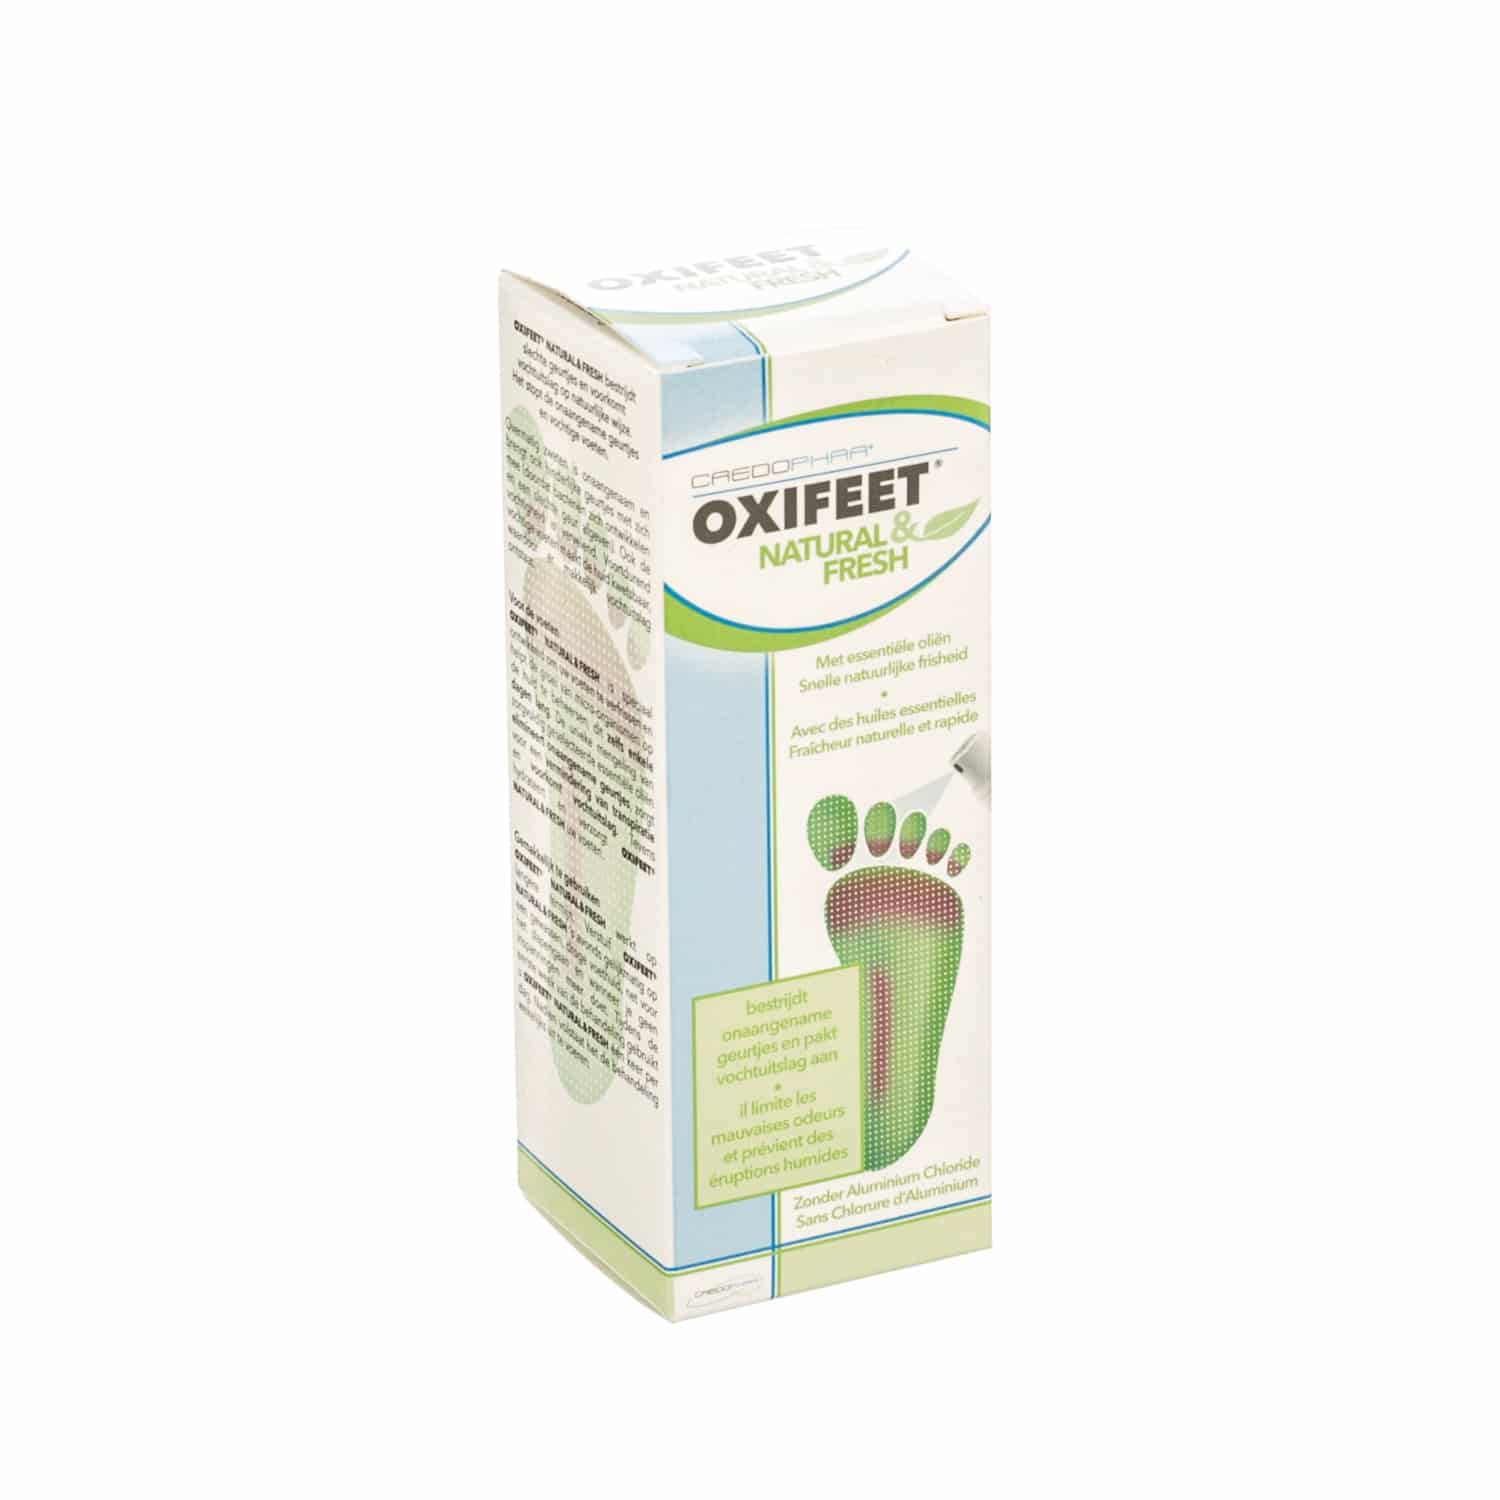 Oxifeet Natural & Fresh Spray